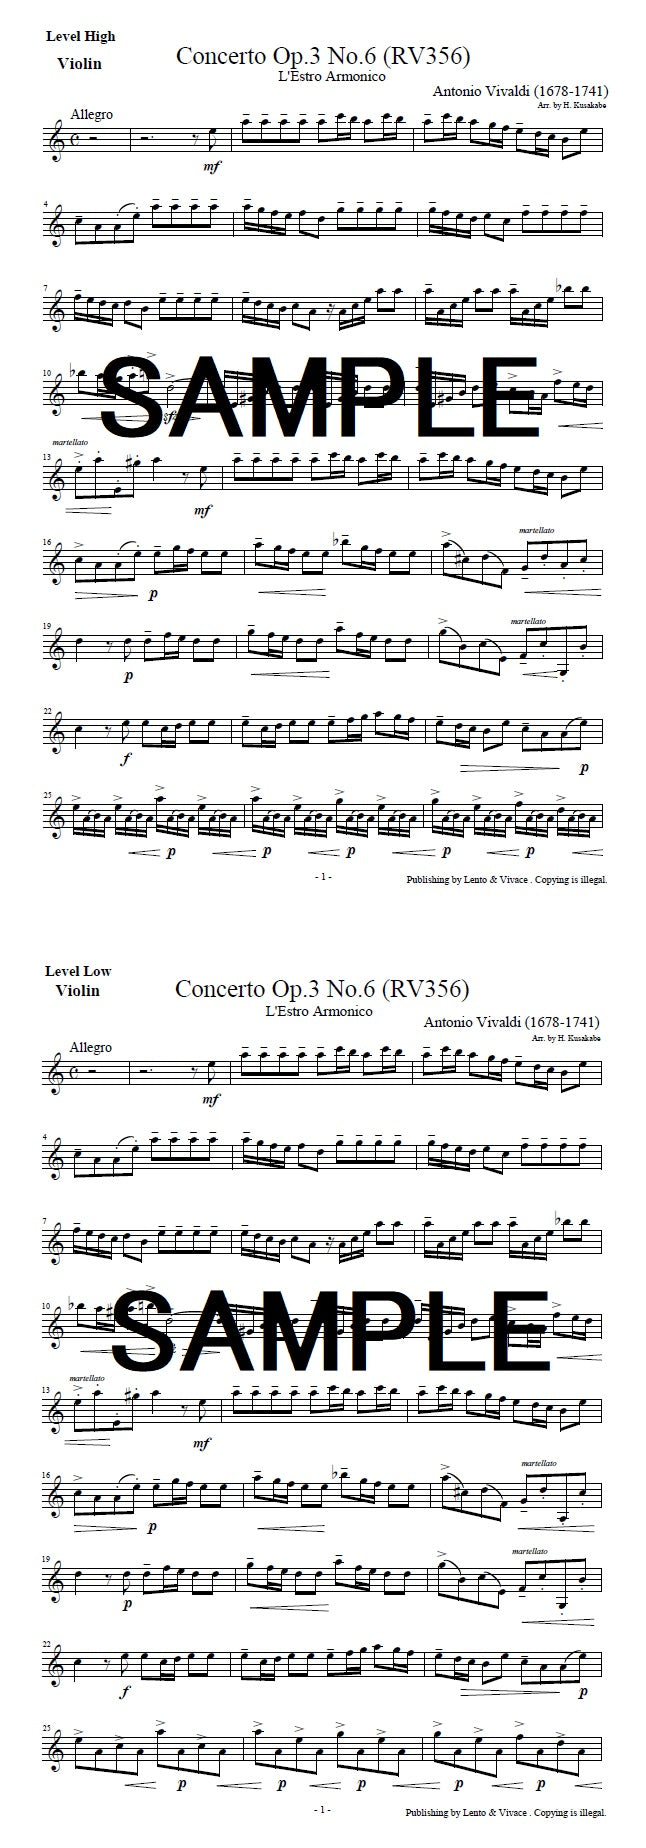 Antonio Vivaldi "Concerto en La Mineur Harmonieux Inspiration Op.3 No. 6"